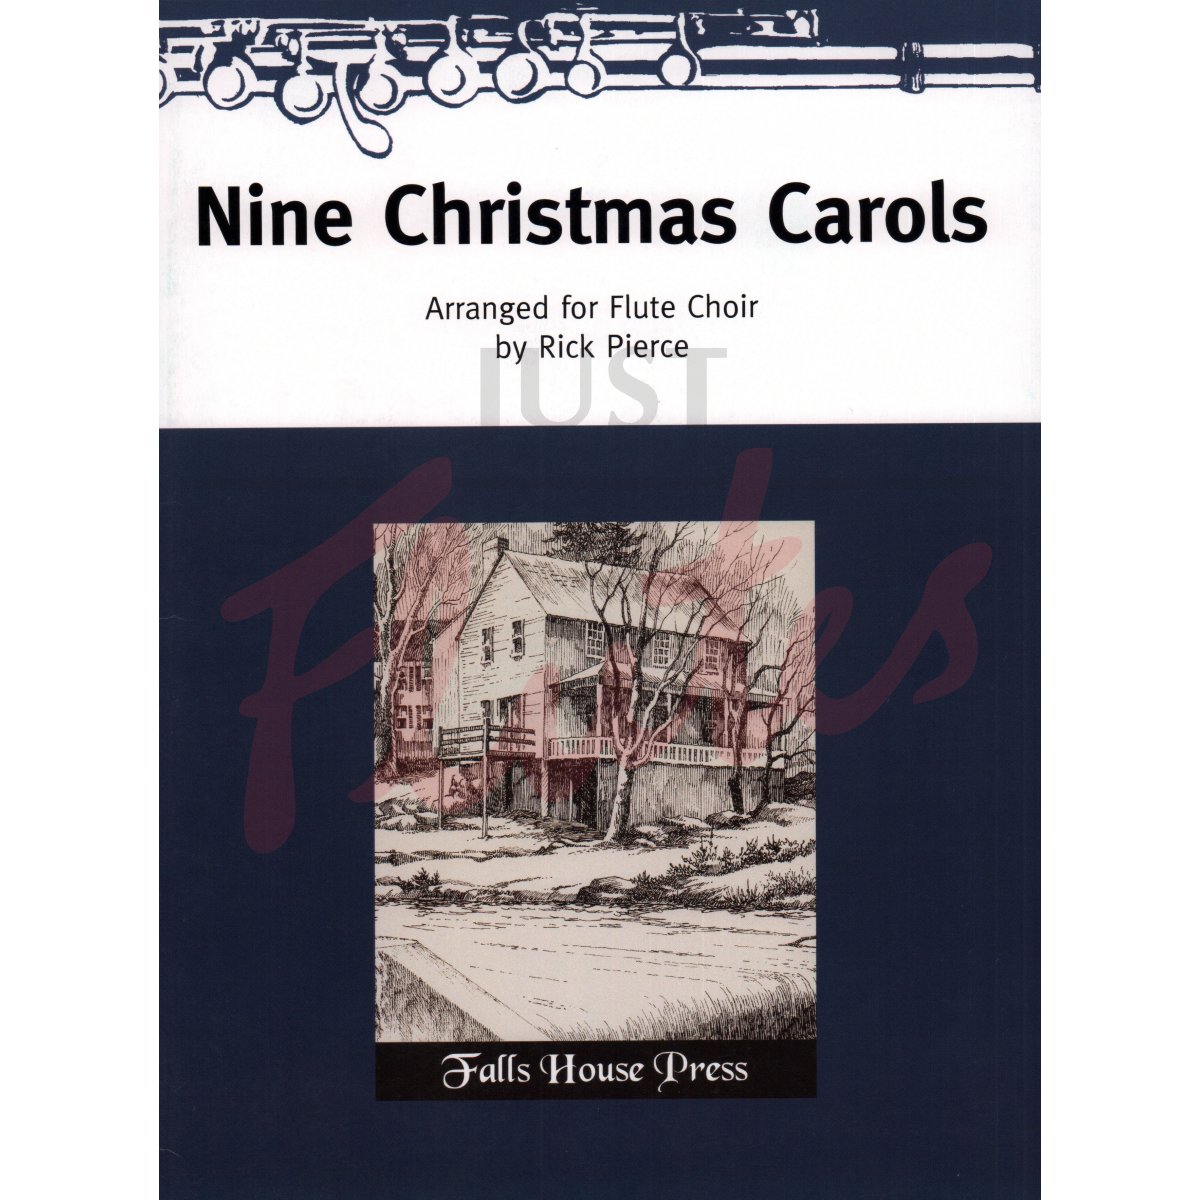 Nine Christmas Carols for Flute Choir